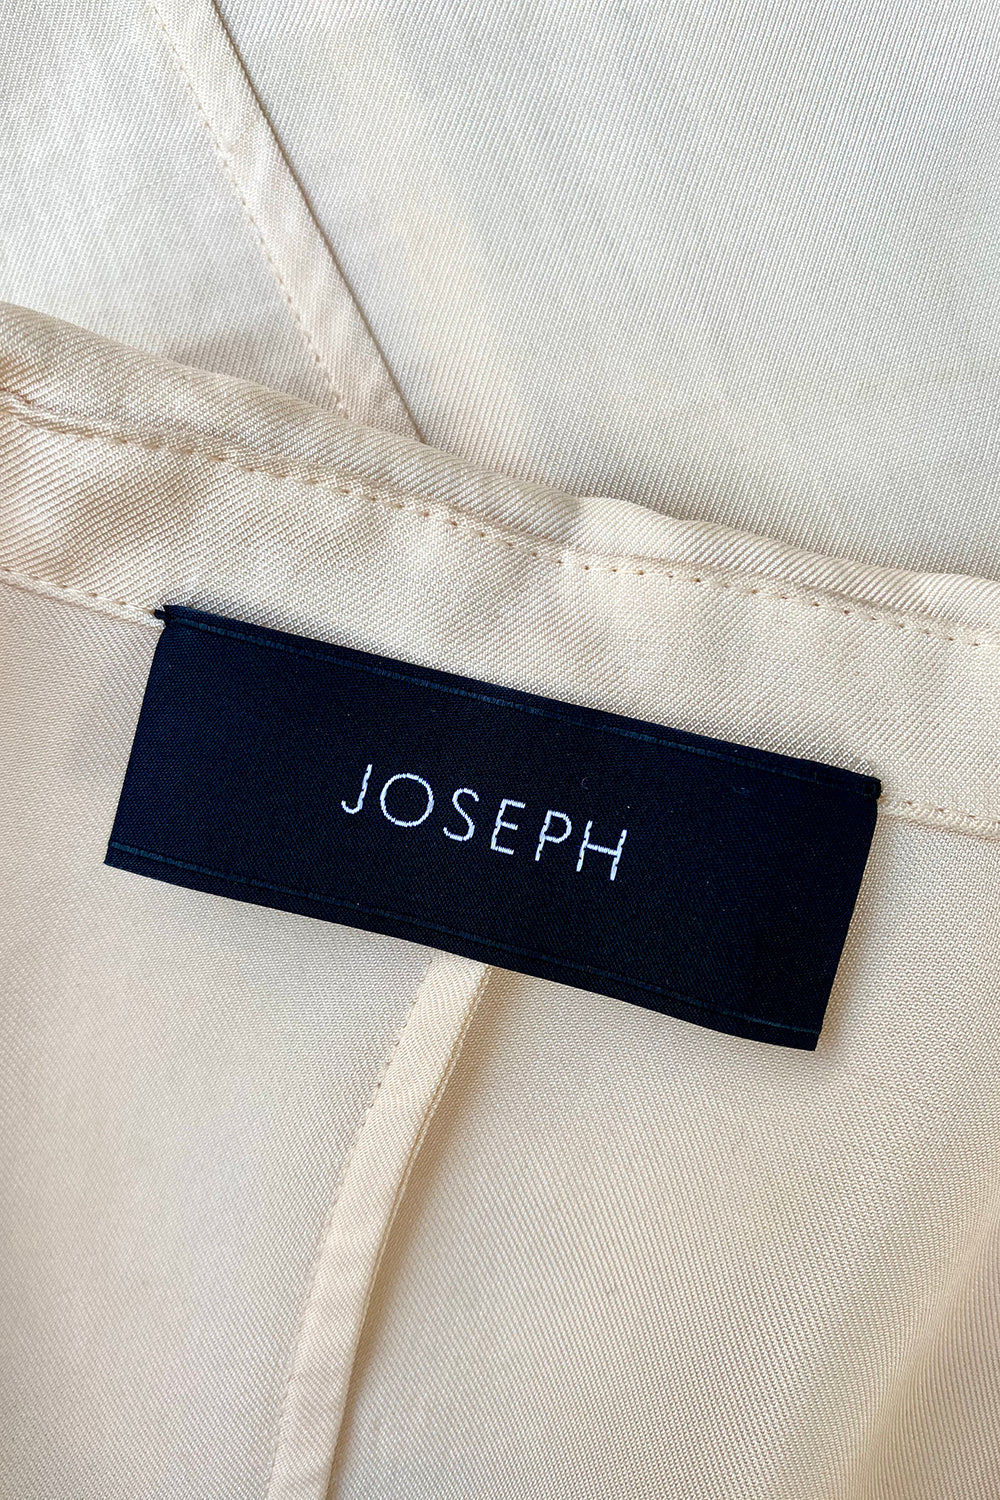 Joseph Pointed Collar Silk Blouse size 6